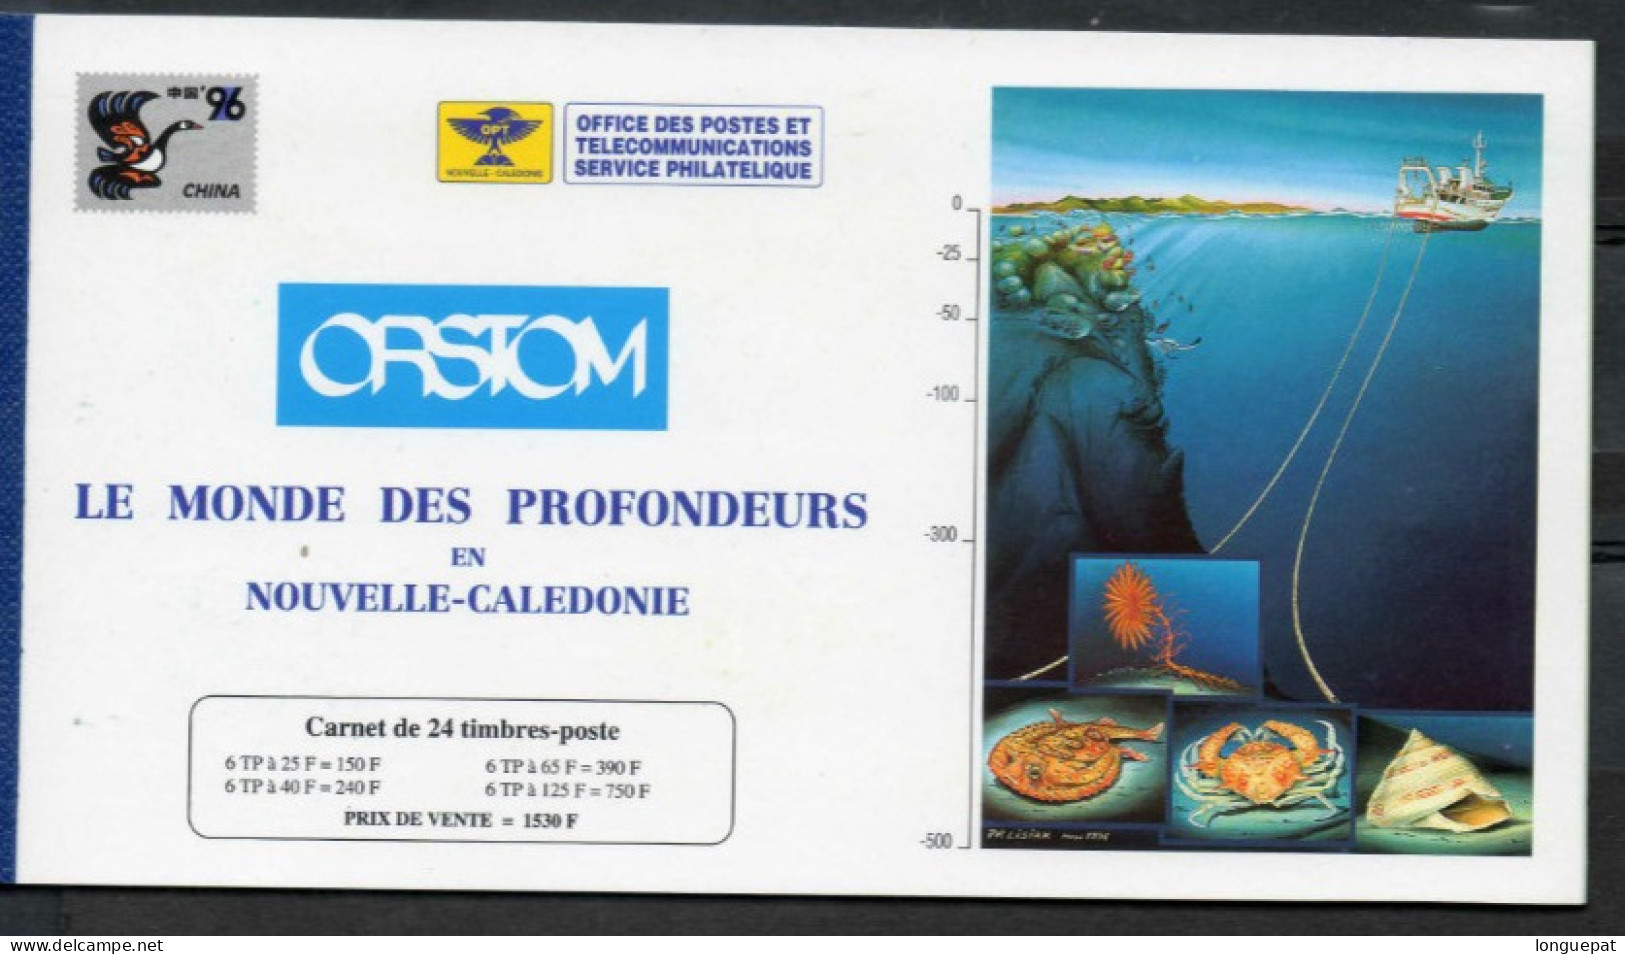 Nelle CALEDONIE : Faune Marine : Poisson, Coquillage, Crabe, Etc - "China 96" Exposition Philatélique - - Carnets